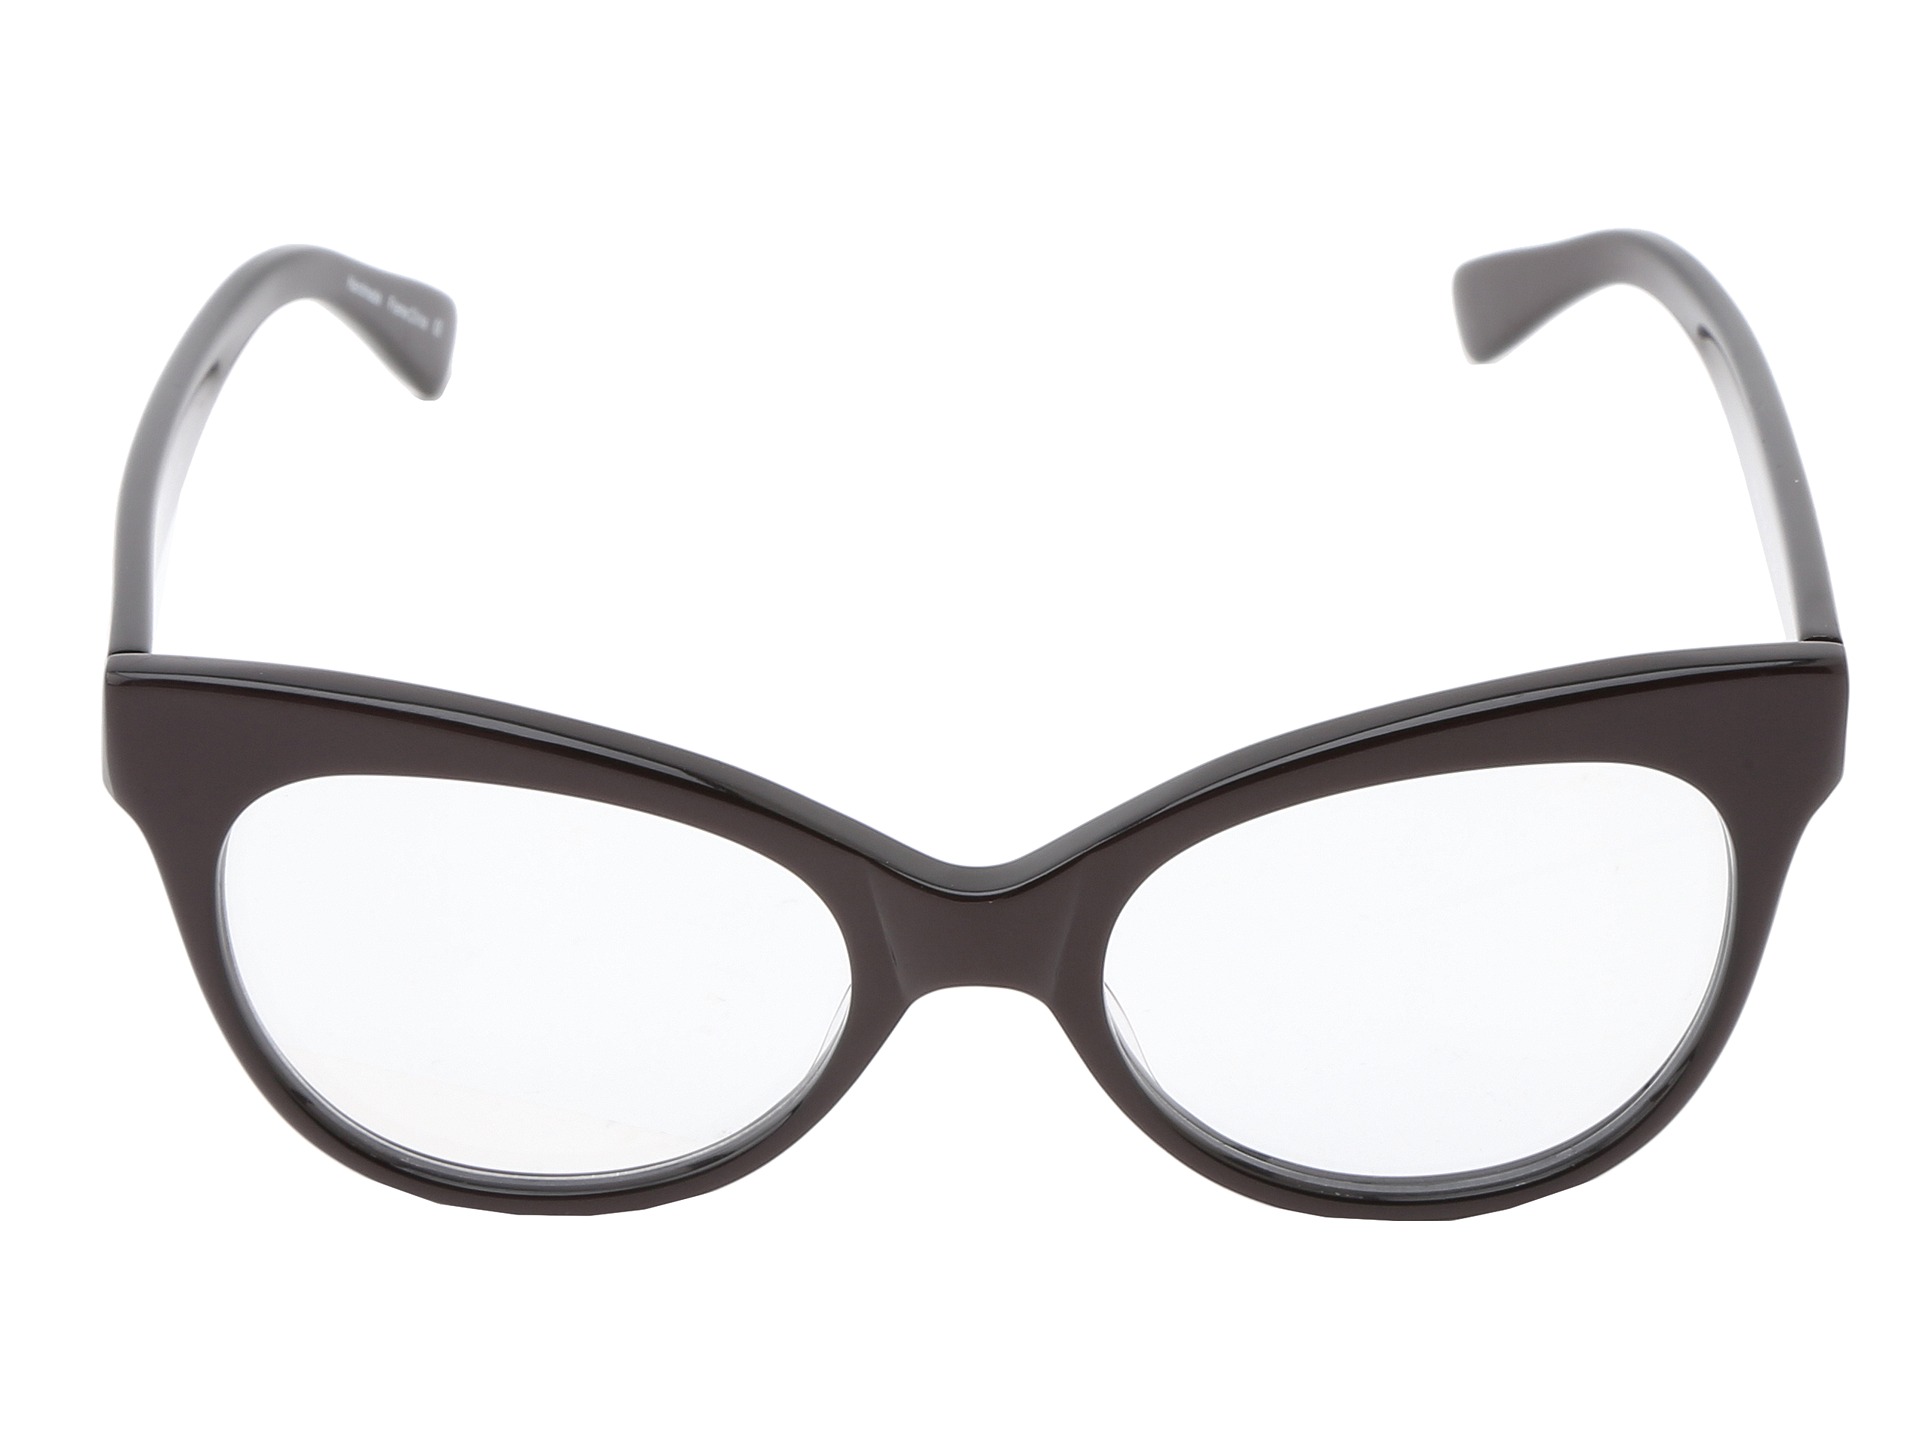 Kamalikulture Square Cat Eye Glasses | Shipped Free at Zappos